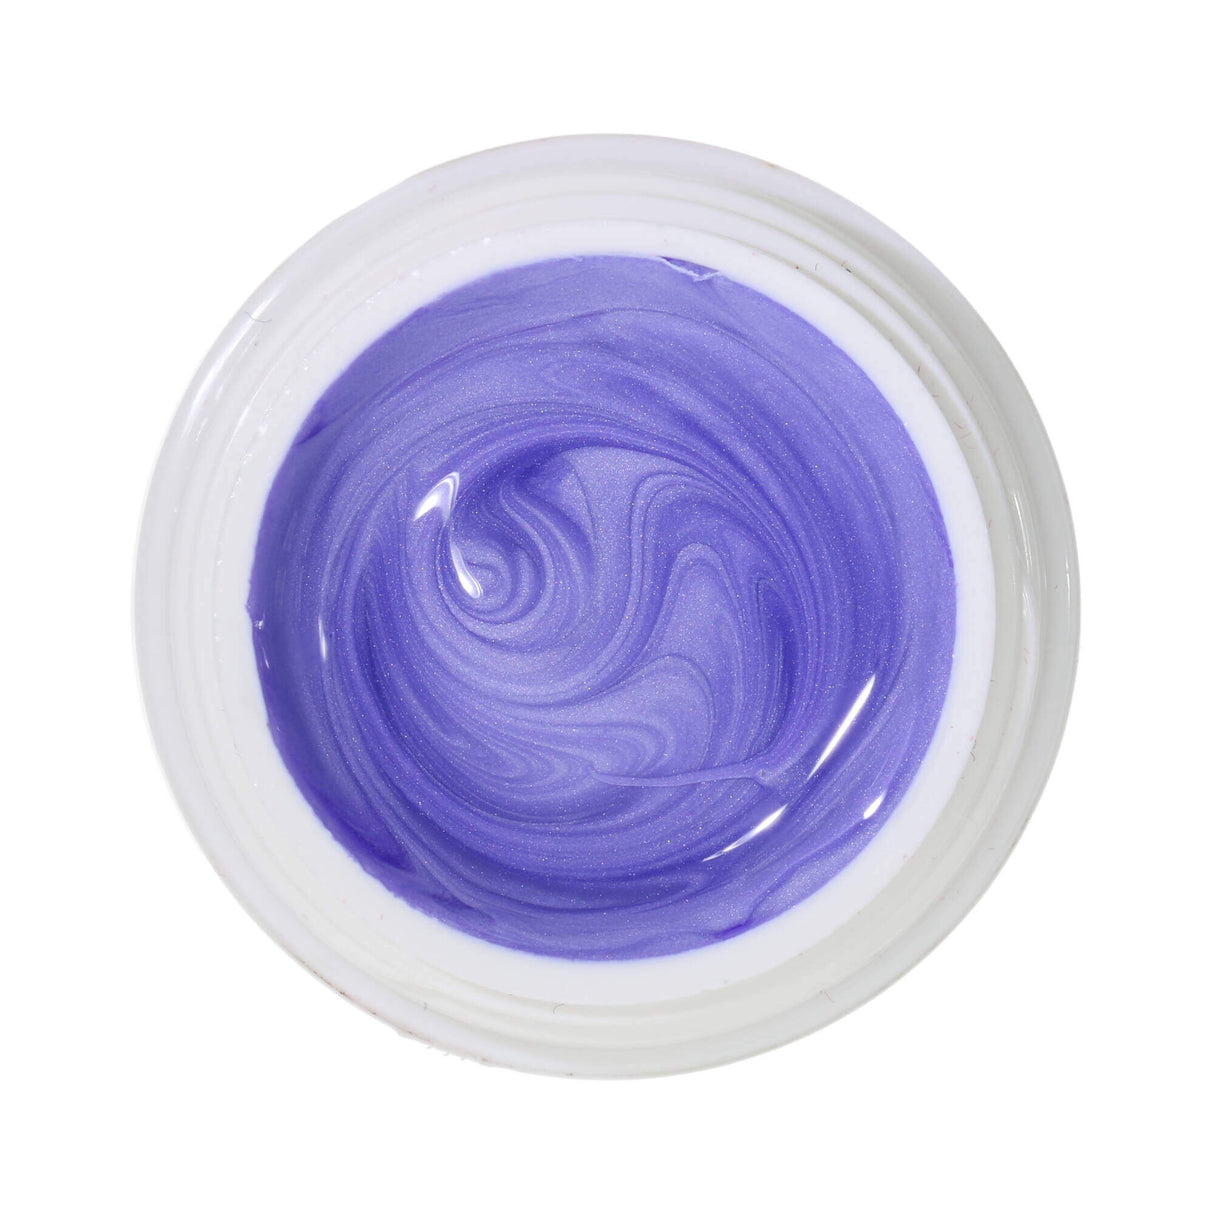 # 269 Premium EFFECT Color Gel 5ml Pale violet-blue with a pronounced silver shimmer effect